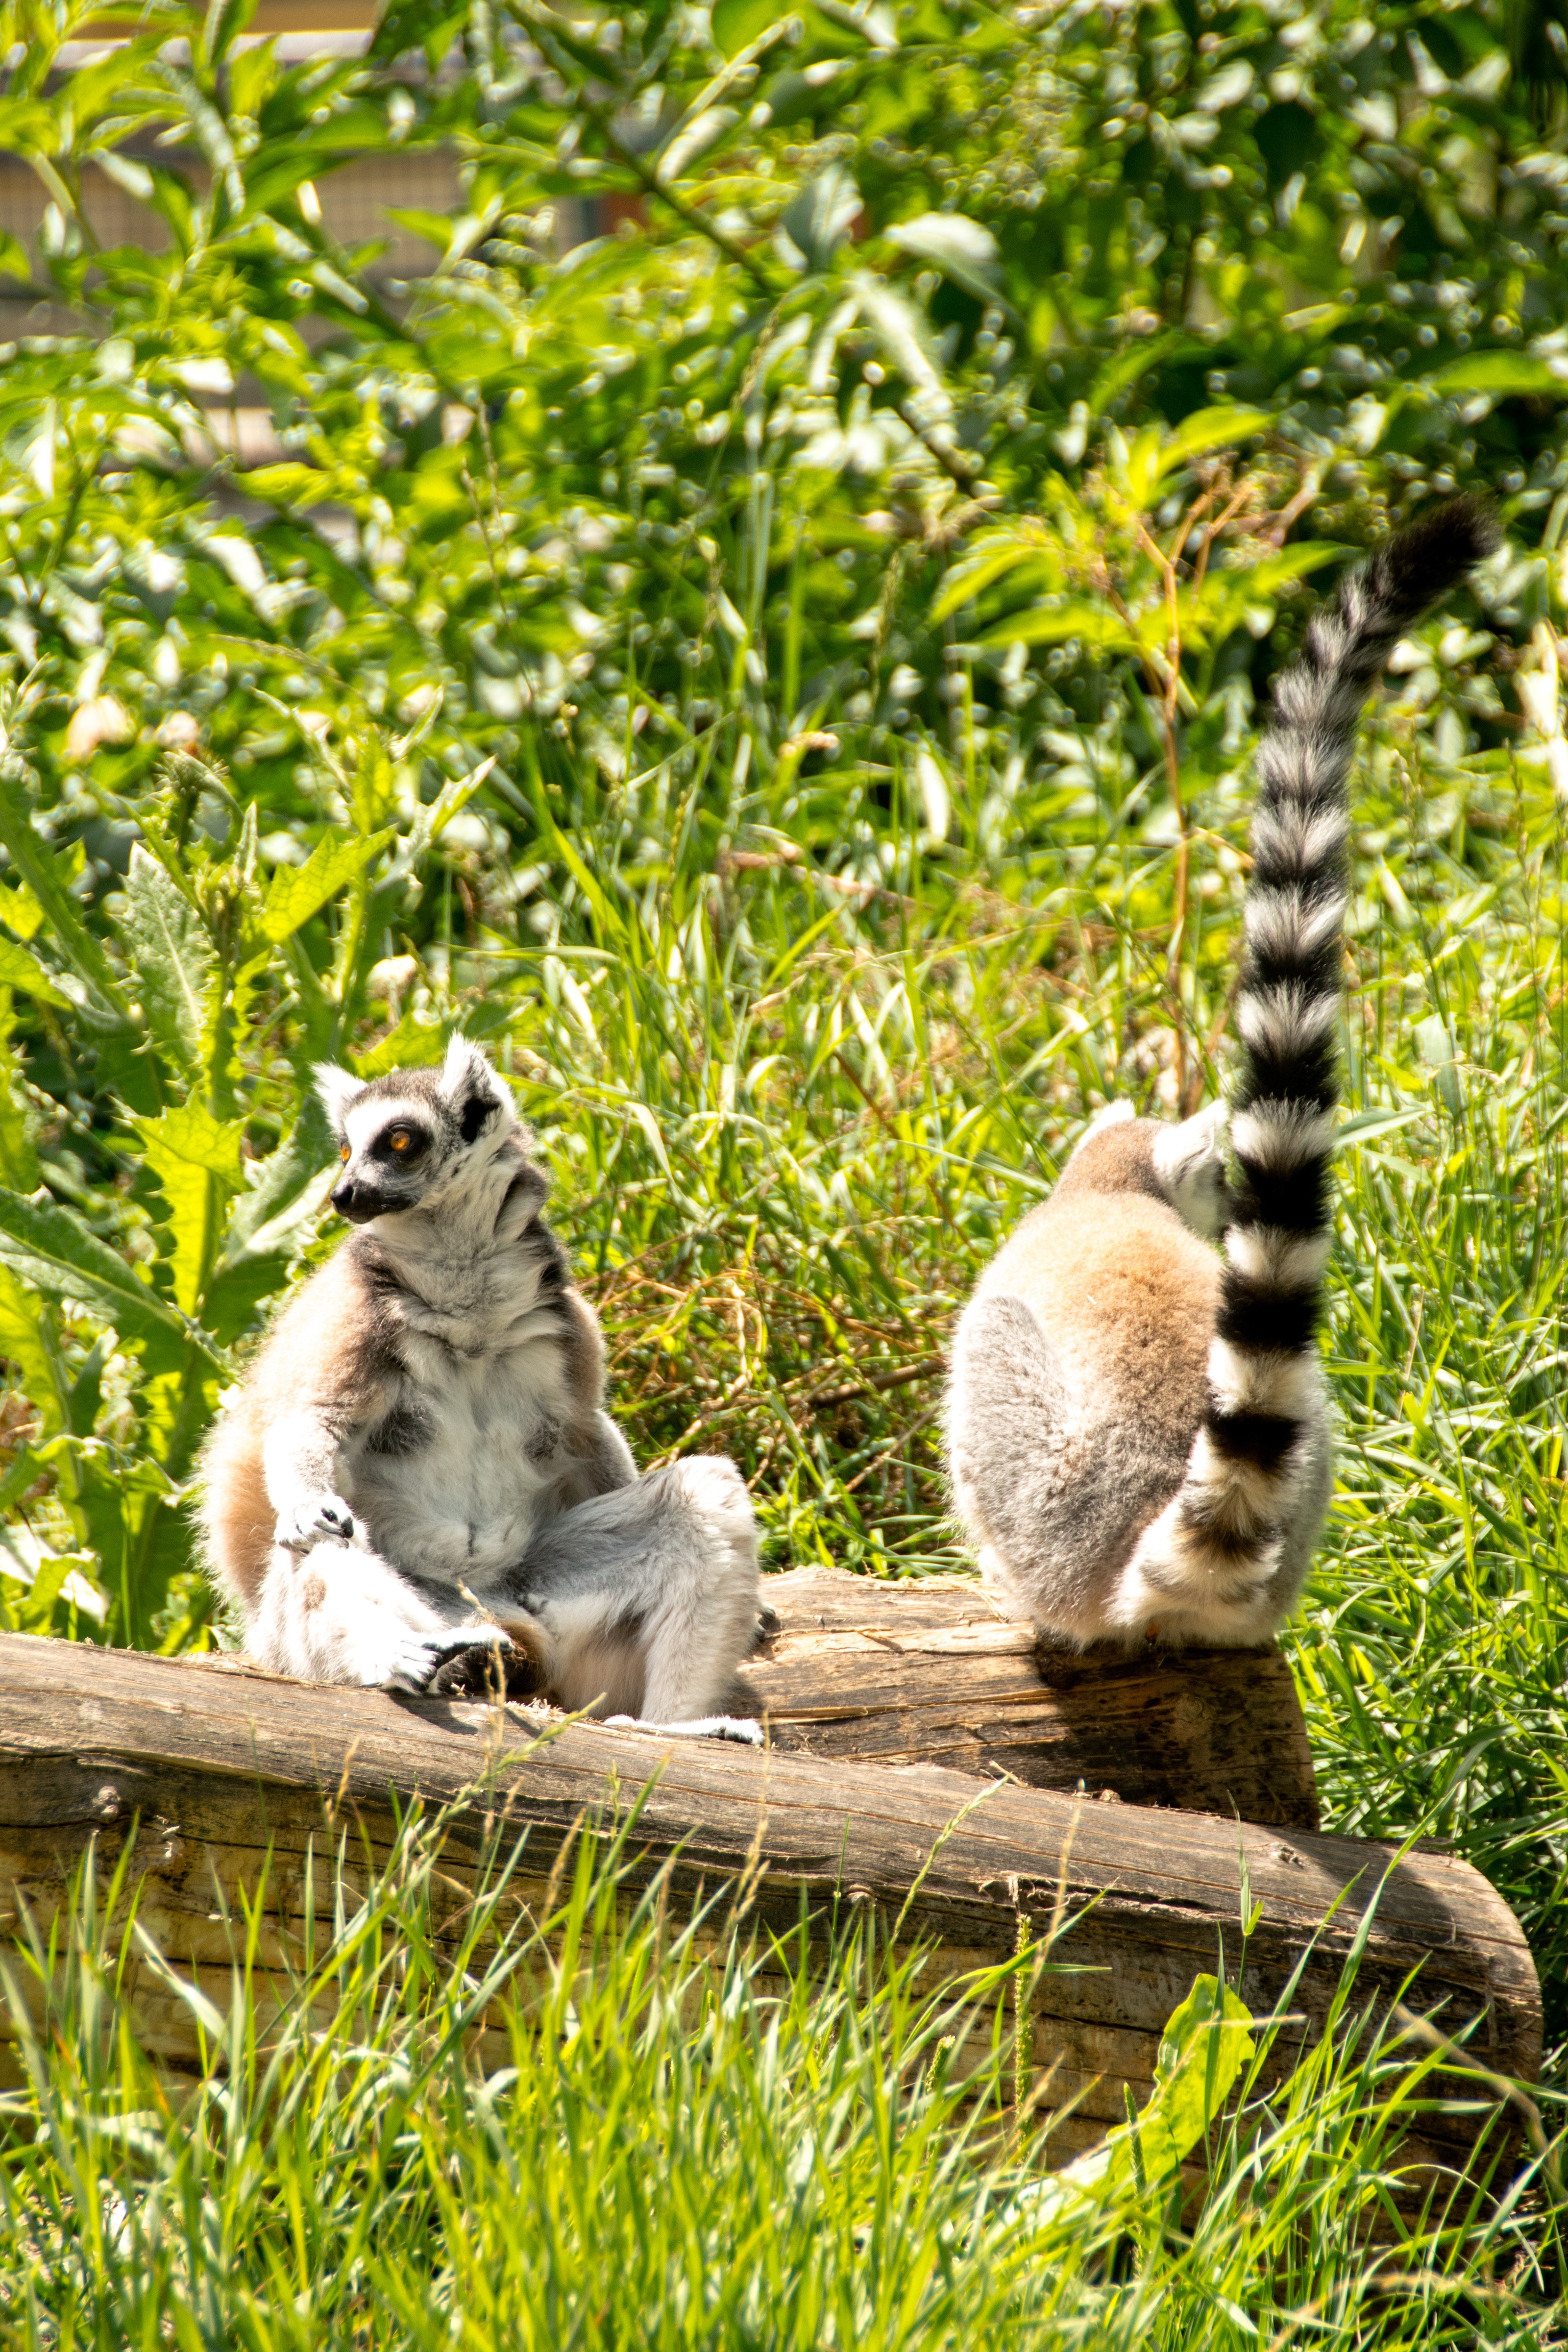 Eye, Lemur Catta, Ring Tailed Lemur, animals in the wild, animal themes